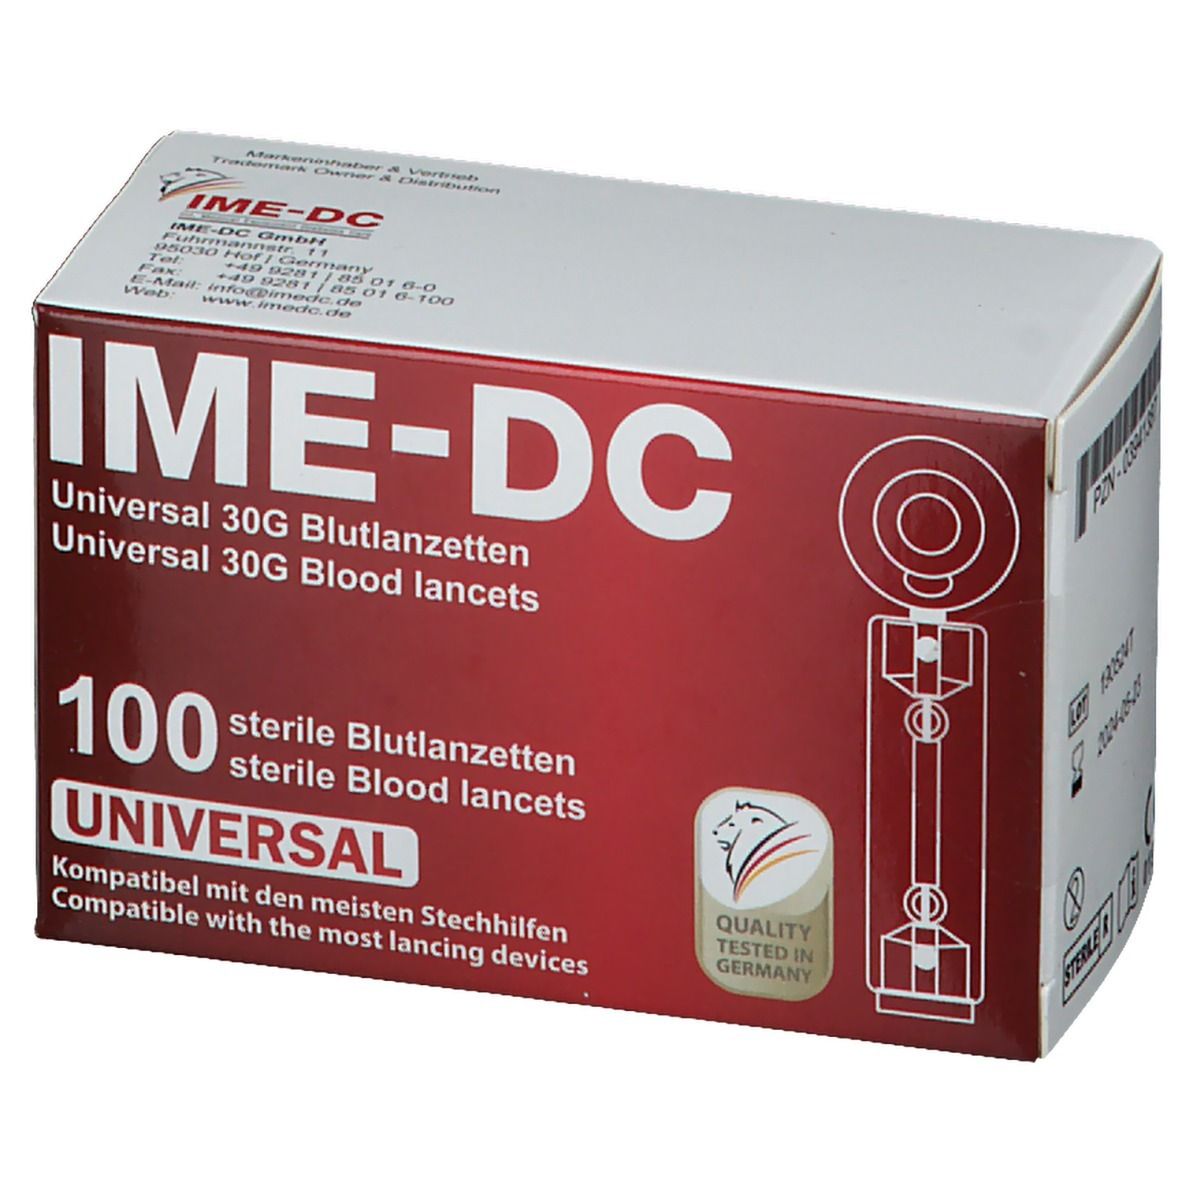 IME-DC Blutlanzetten